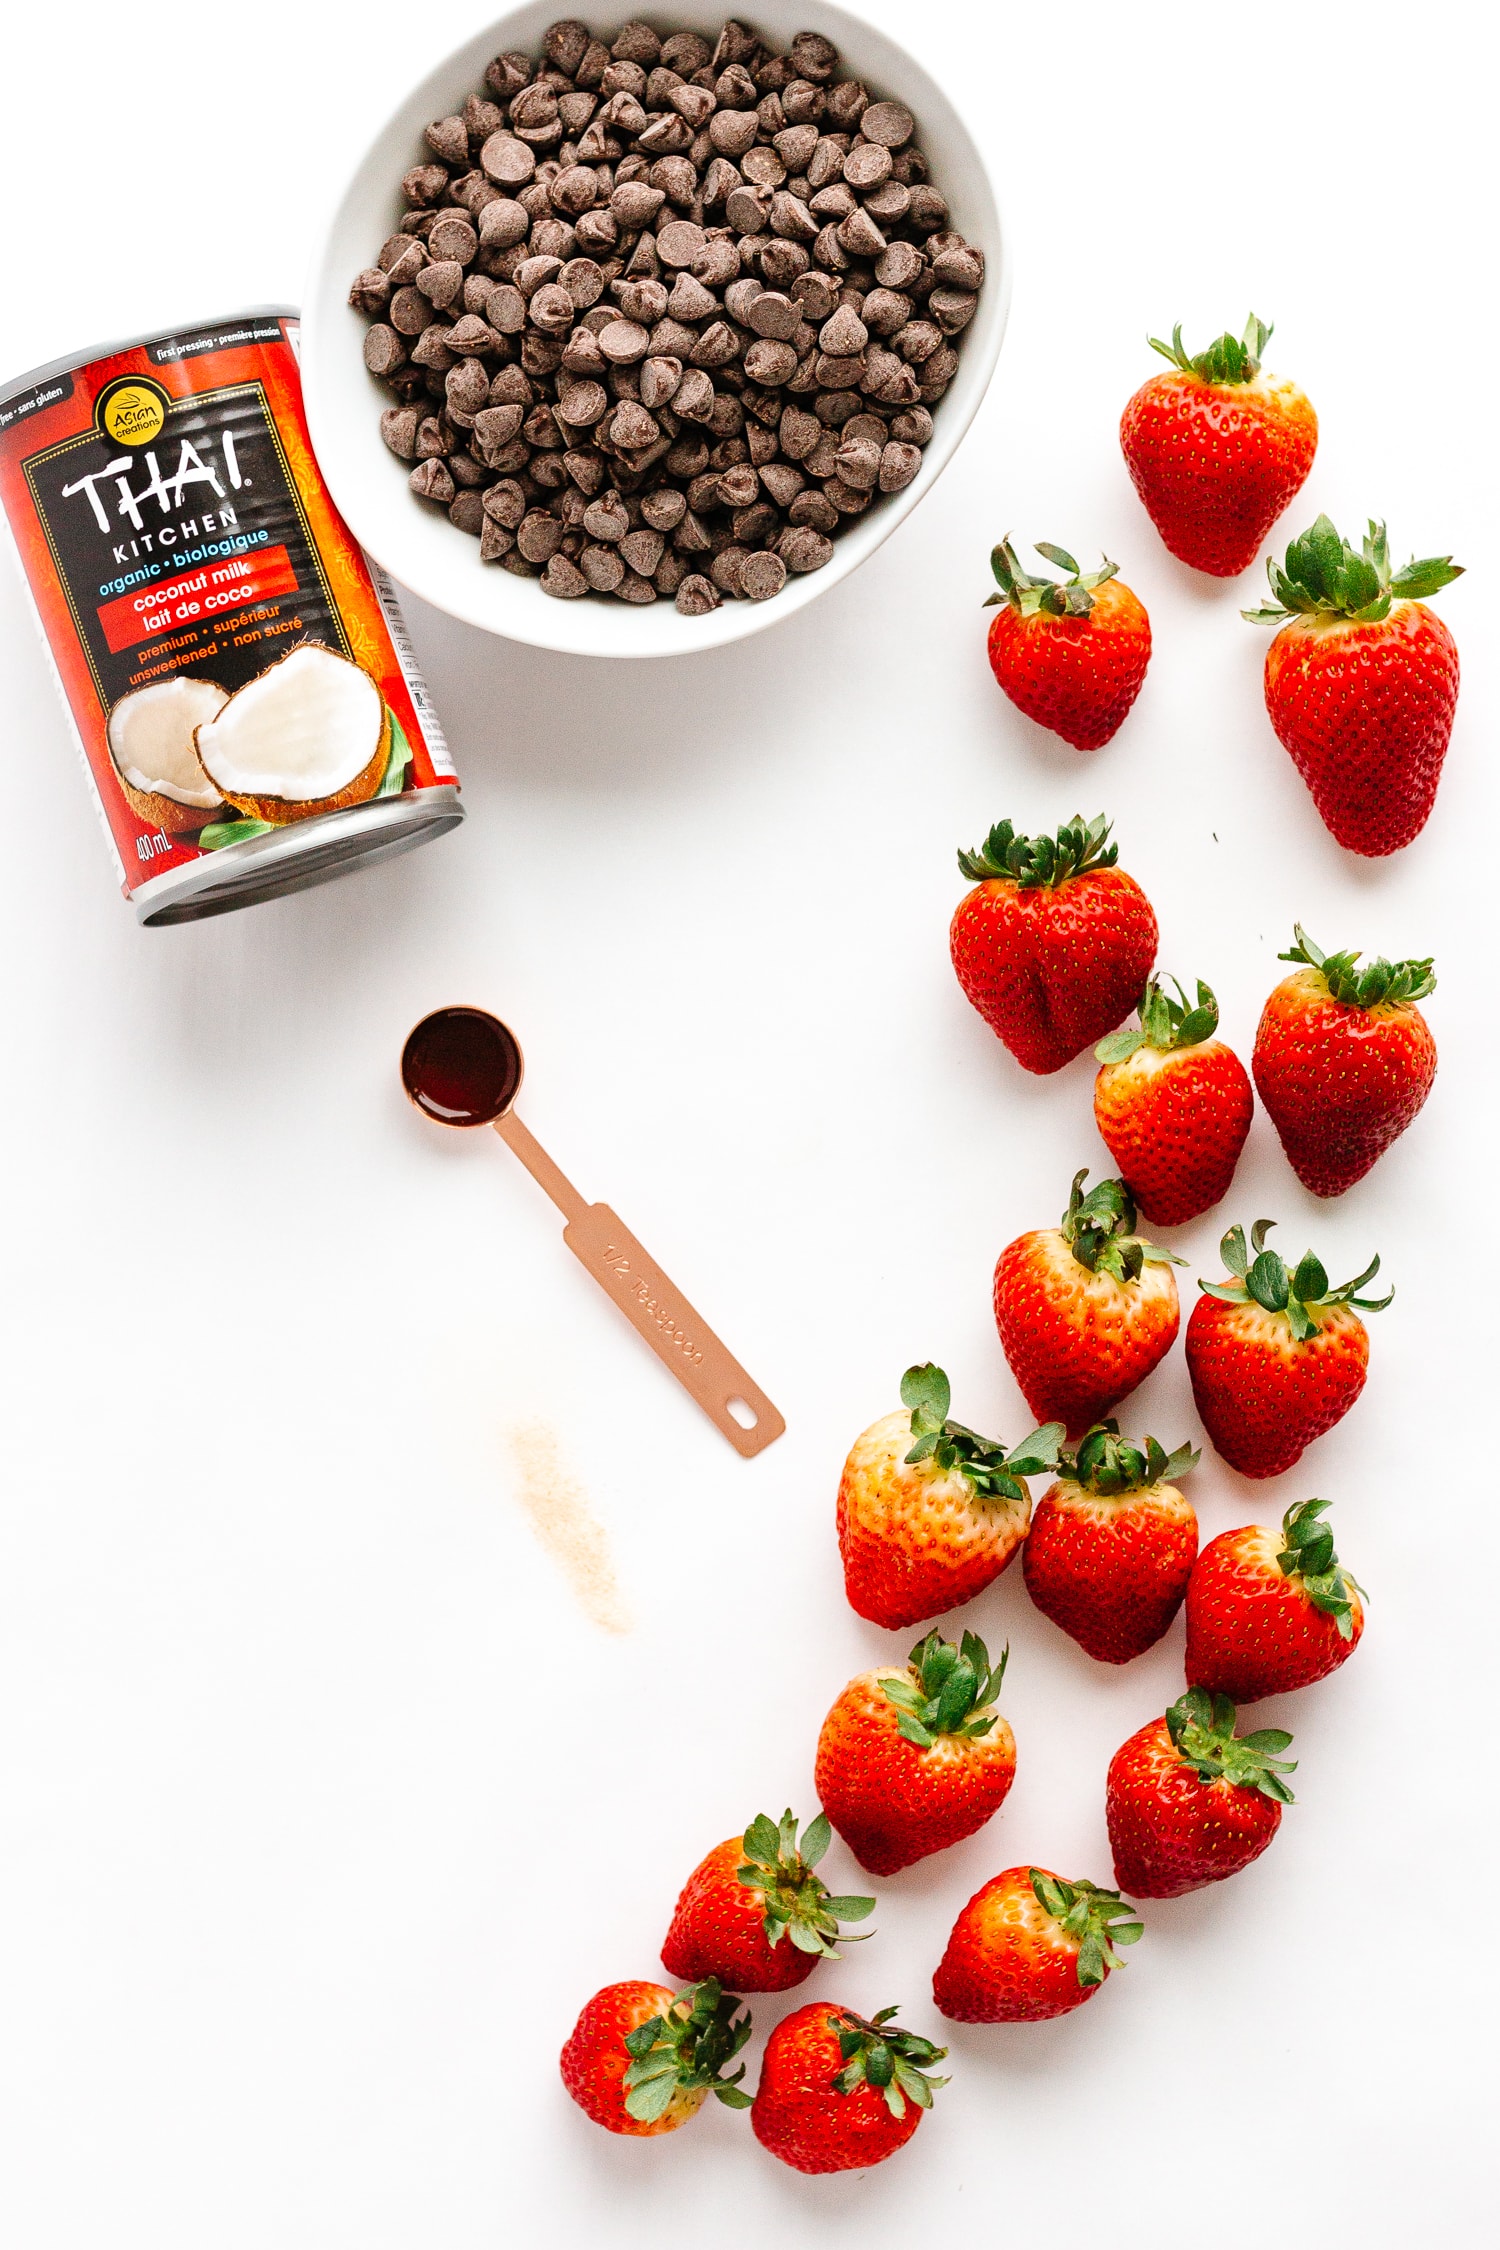 Flatlay showing ingredients needed to make chocolate coconut cream stuffed strawberries.